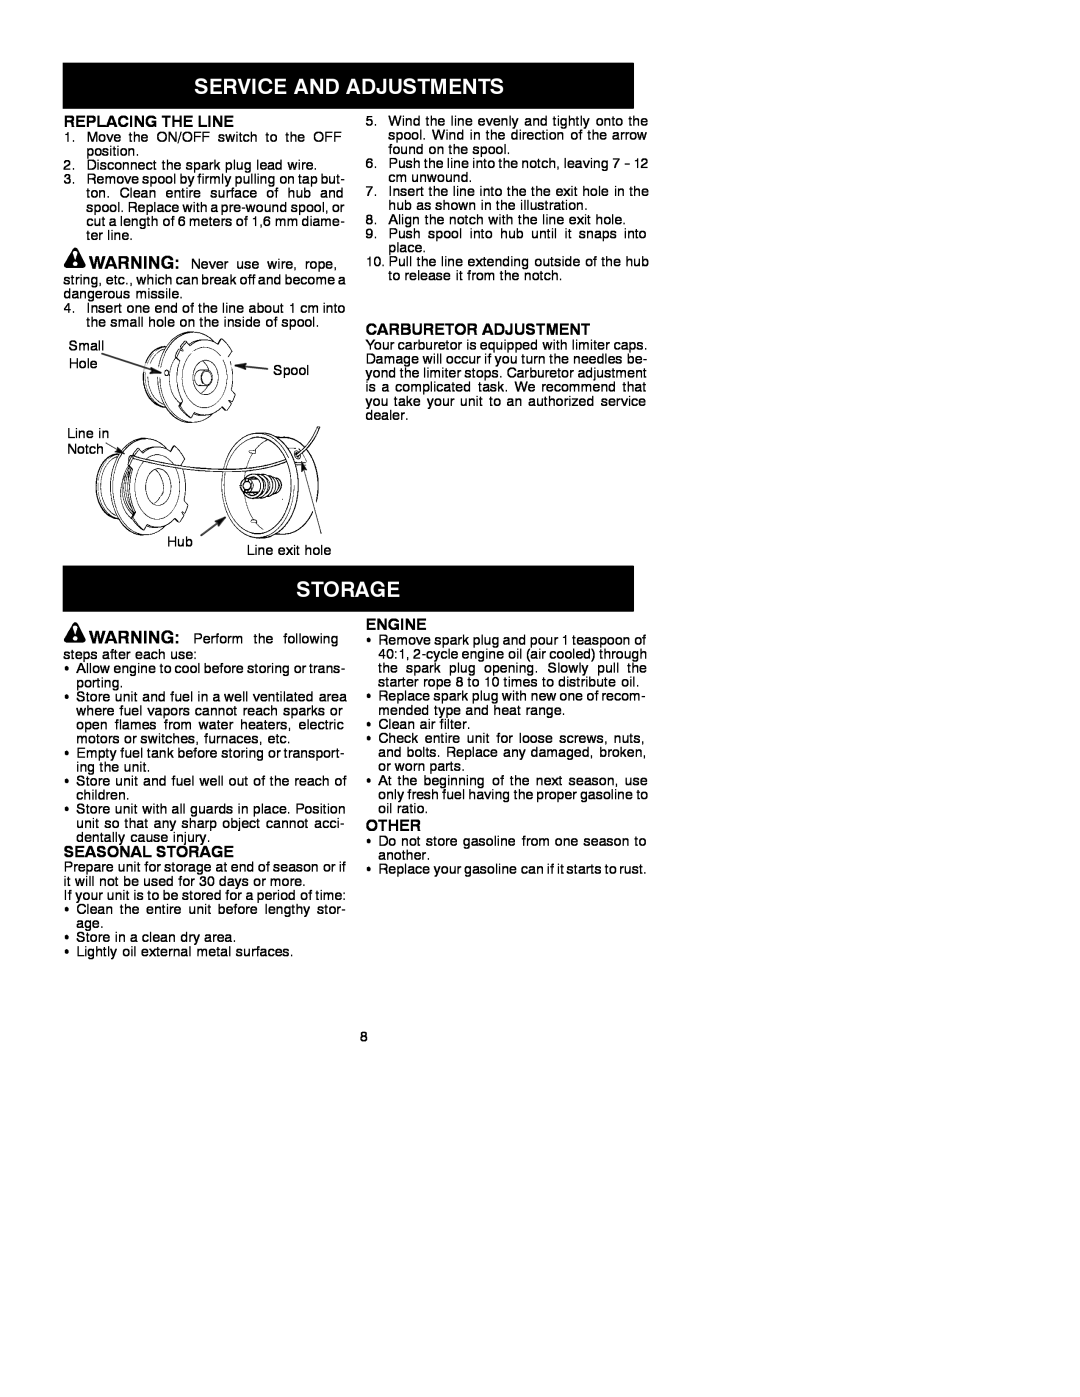 Electrolux GT21L instruction manual Replacing The Line, Carburetor Adjustment, Seasonal Storage, Engine, Other 